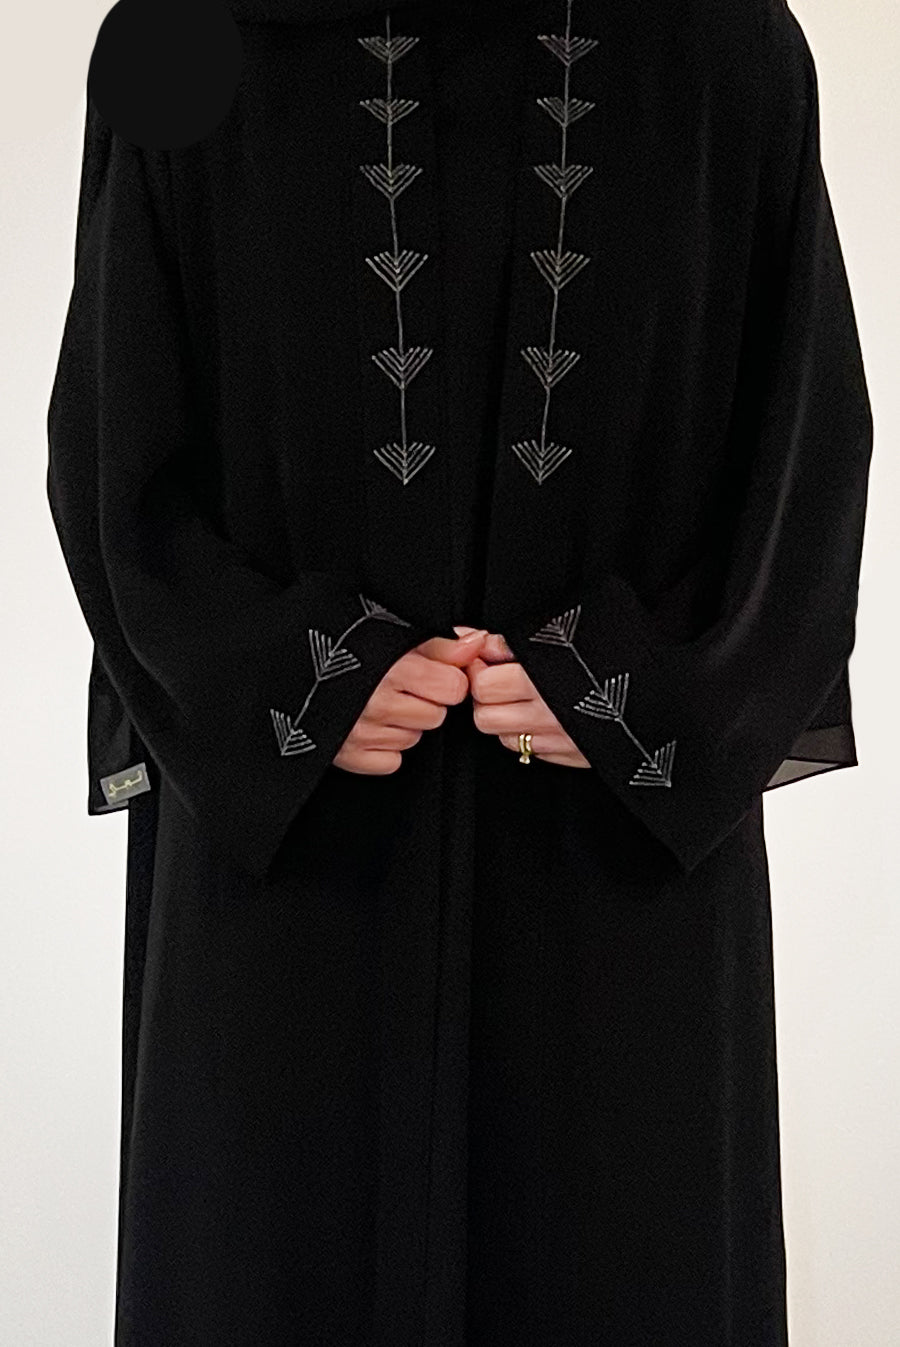 black designer abaya - thowby - dubai online abaya shops